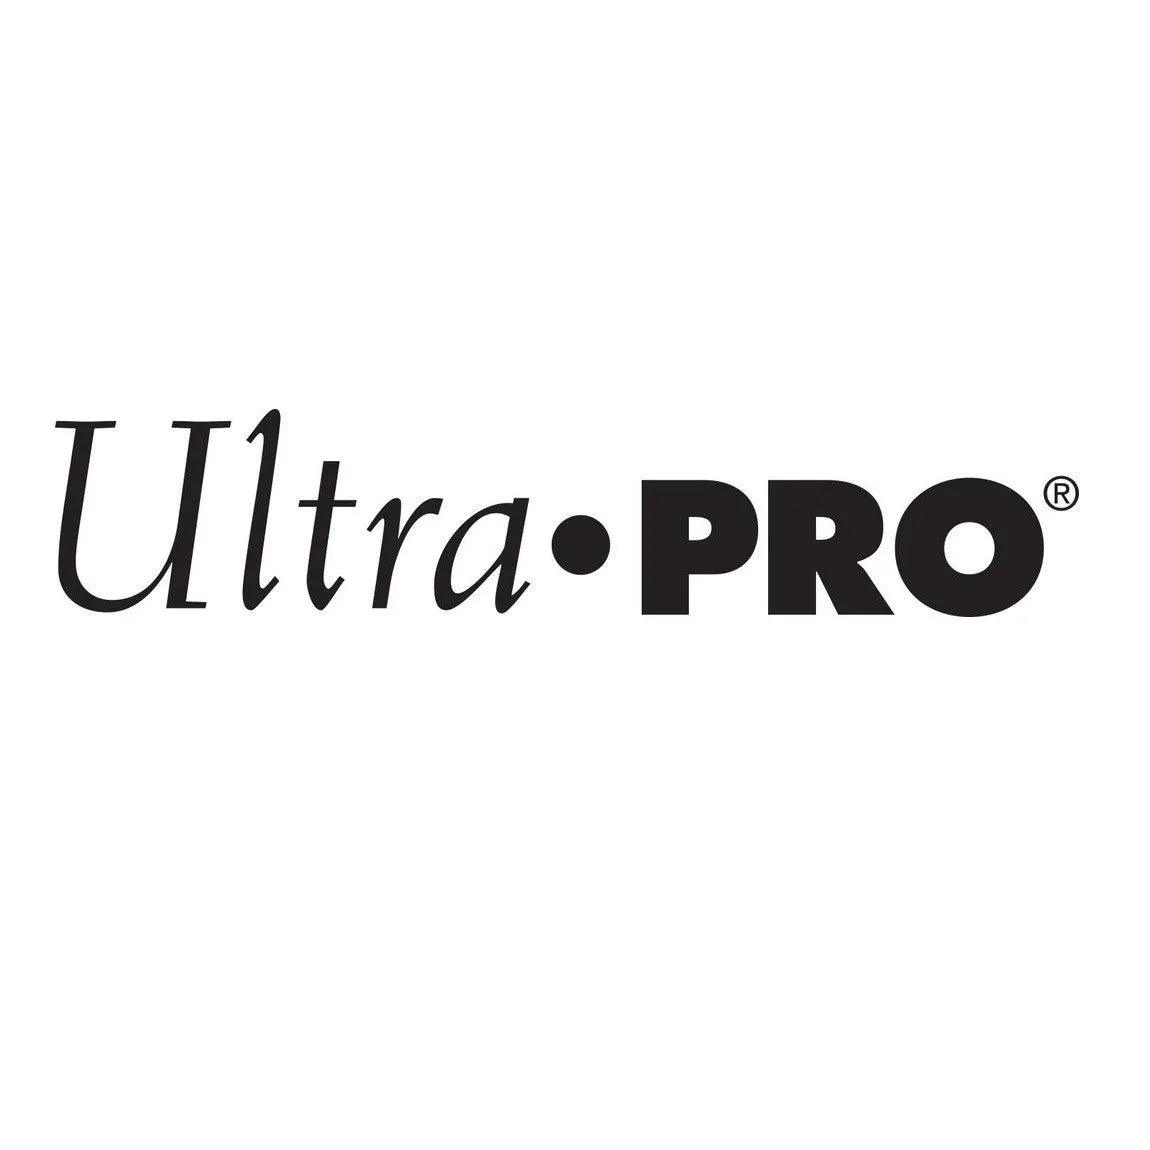 Ultra PRO - Album/Binder/Portfolio 9-Pocket PRO Leather Premium (Holds 360 Cards) - Pokemon - Mewtwo - Hobby Champion Inc